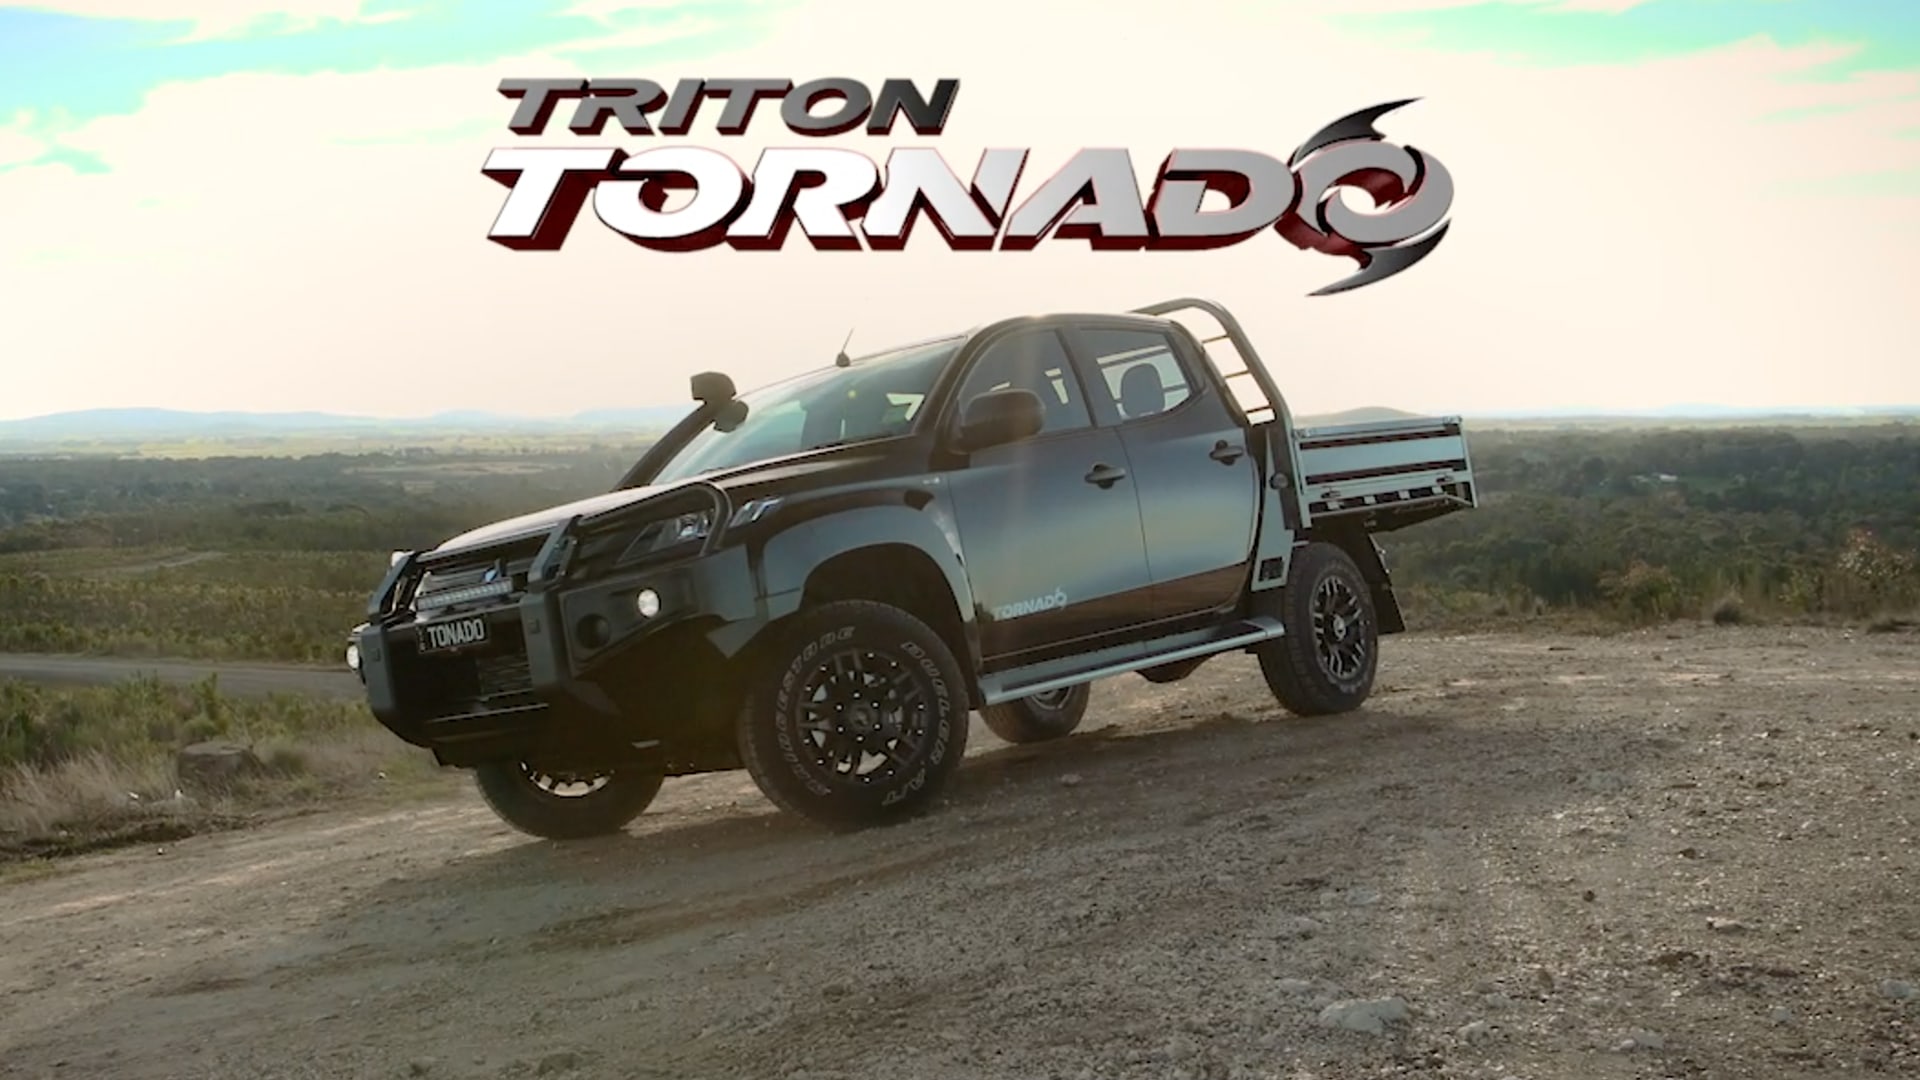 kin tornado tvcs featured - rebrand